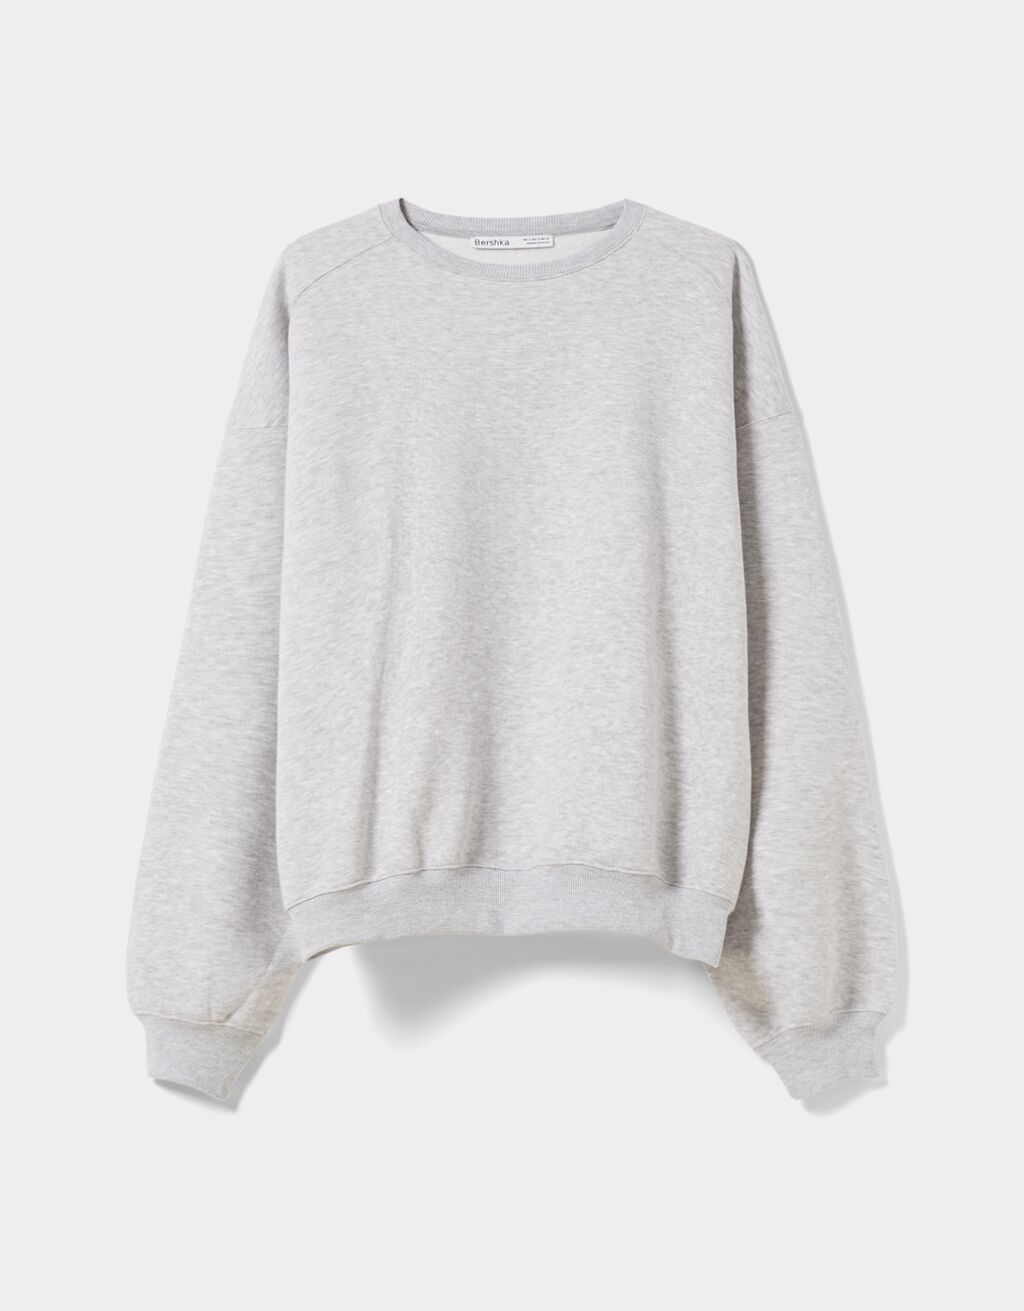 White S Bershka sweatshirt discount 95% WOMEN FASHION Jumpers & Sweatshirts Casual 